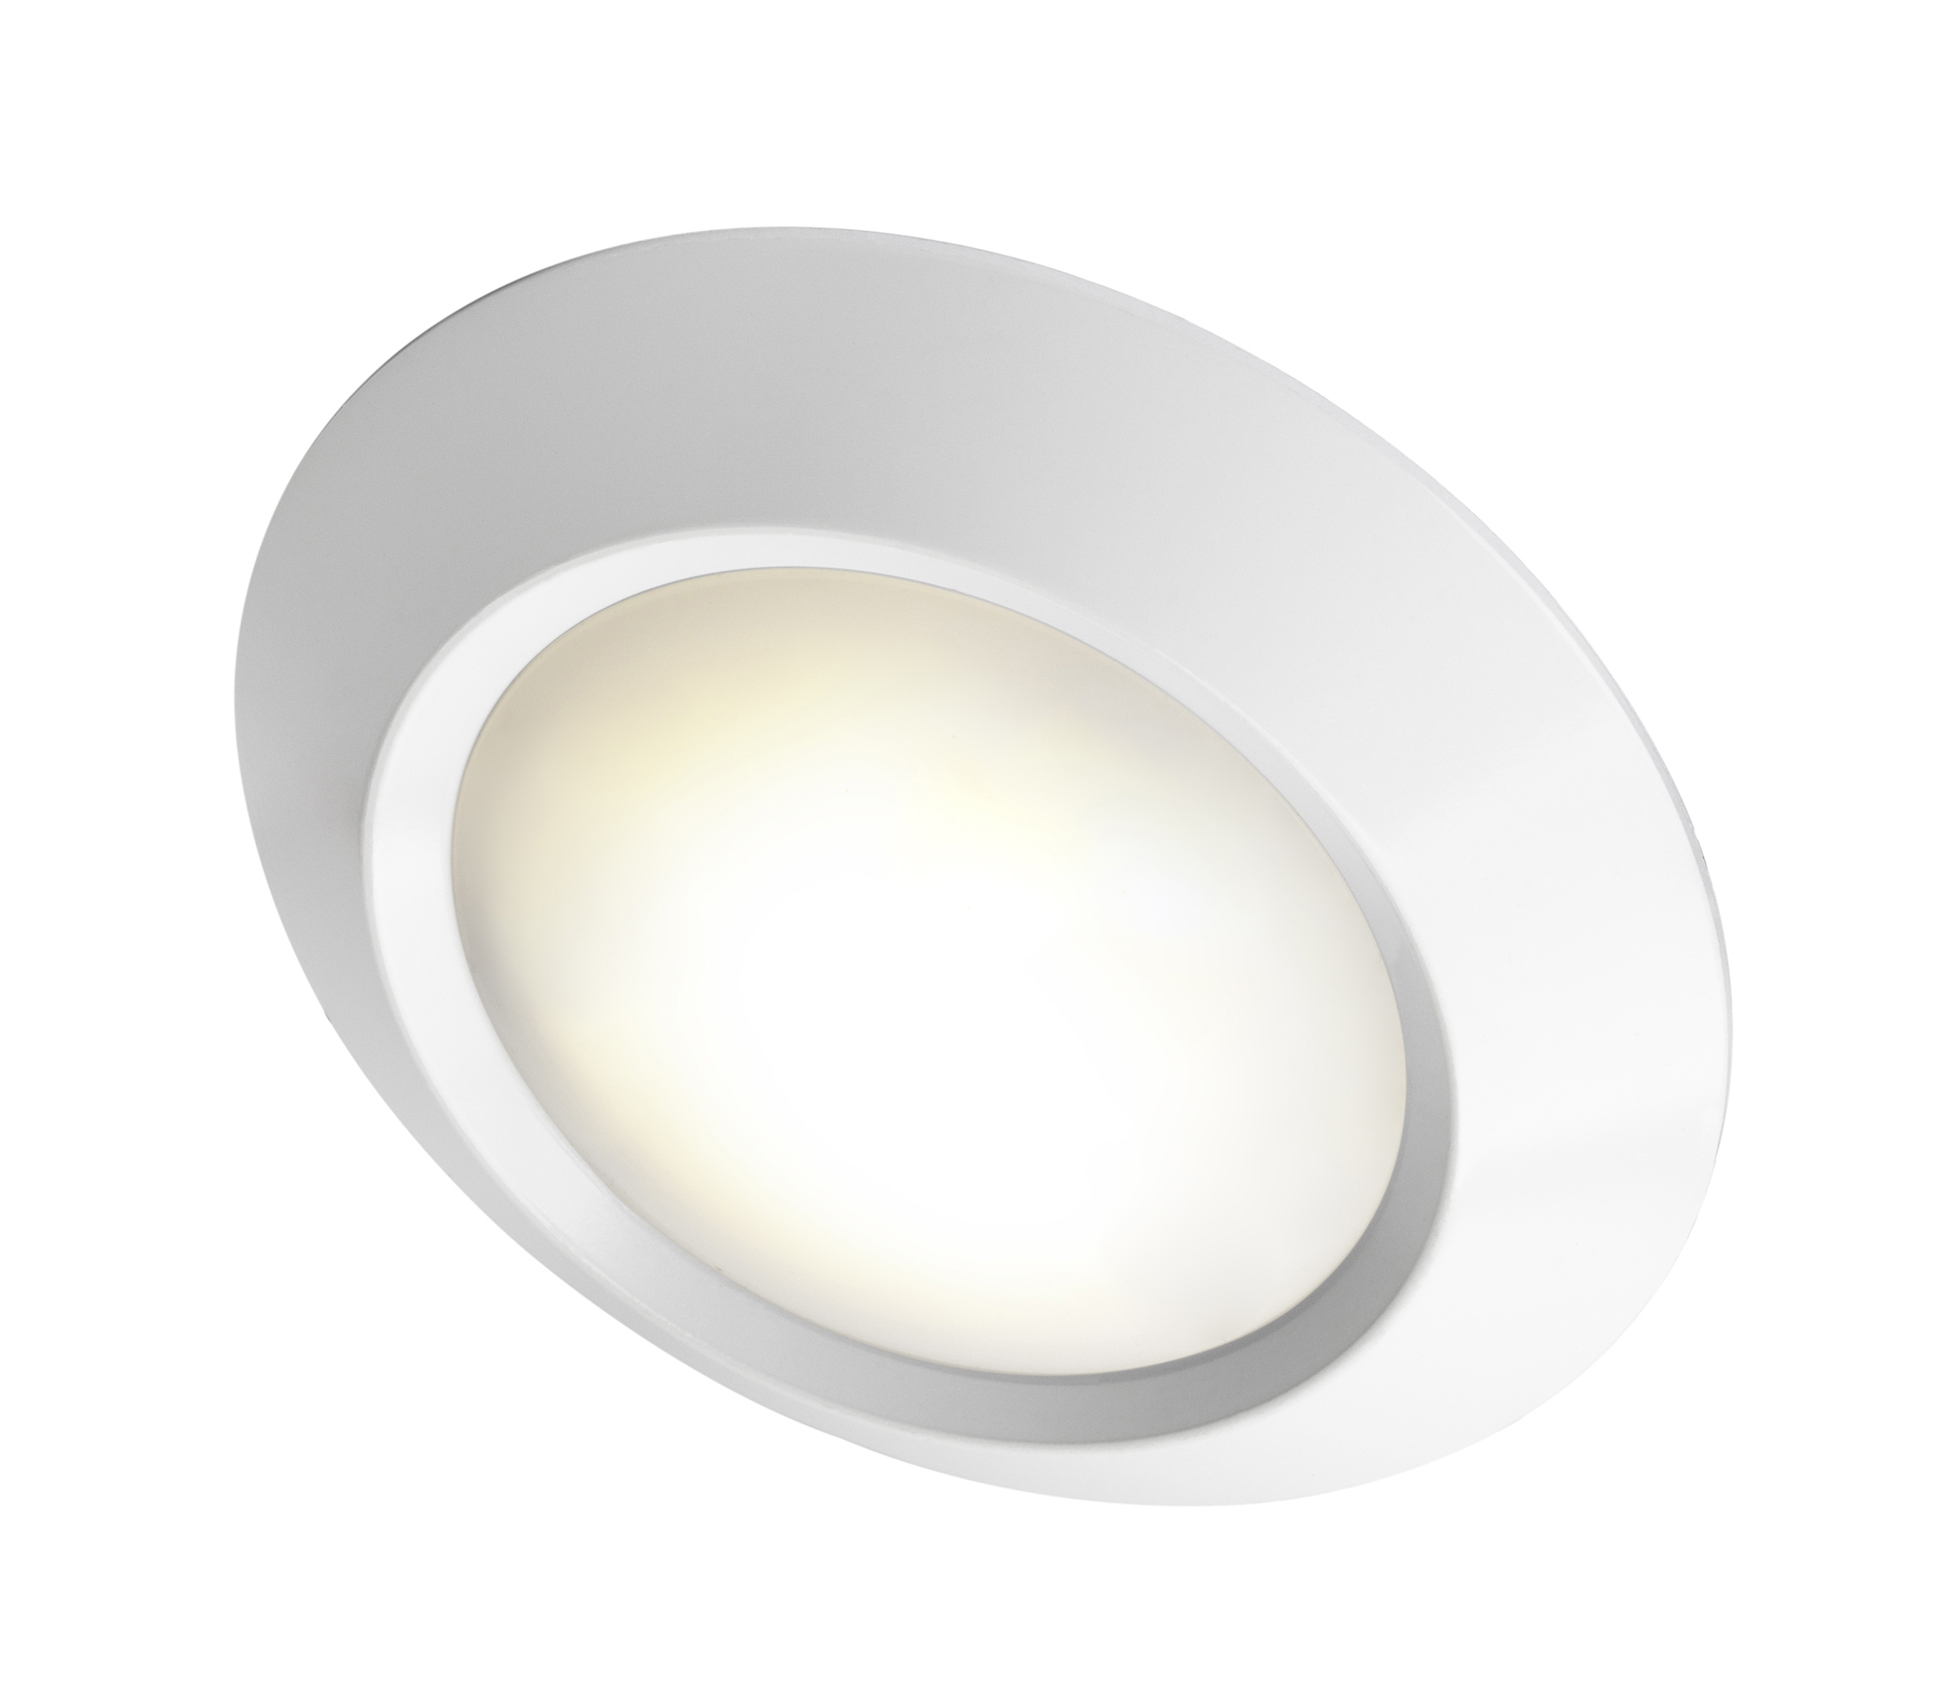 CREE LED High Power blanc neutre 10.9 W 425 lm 115 ° 18 V 500 mA 